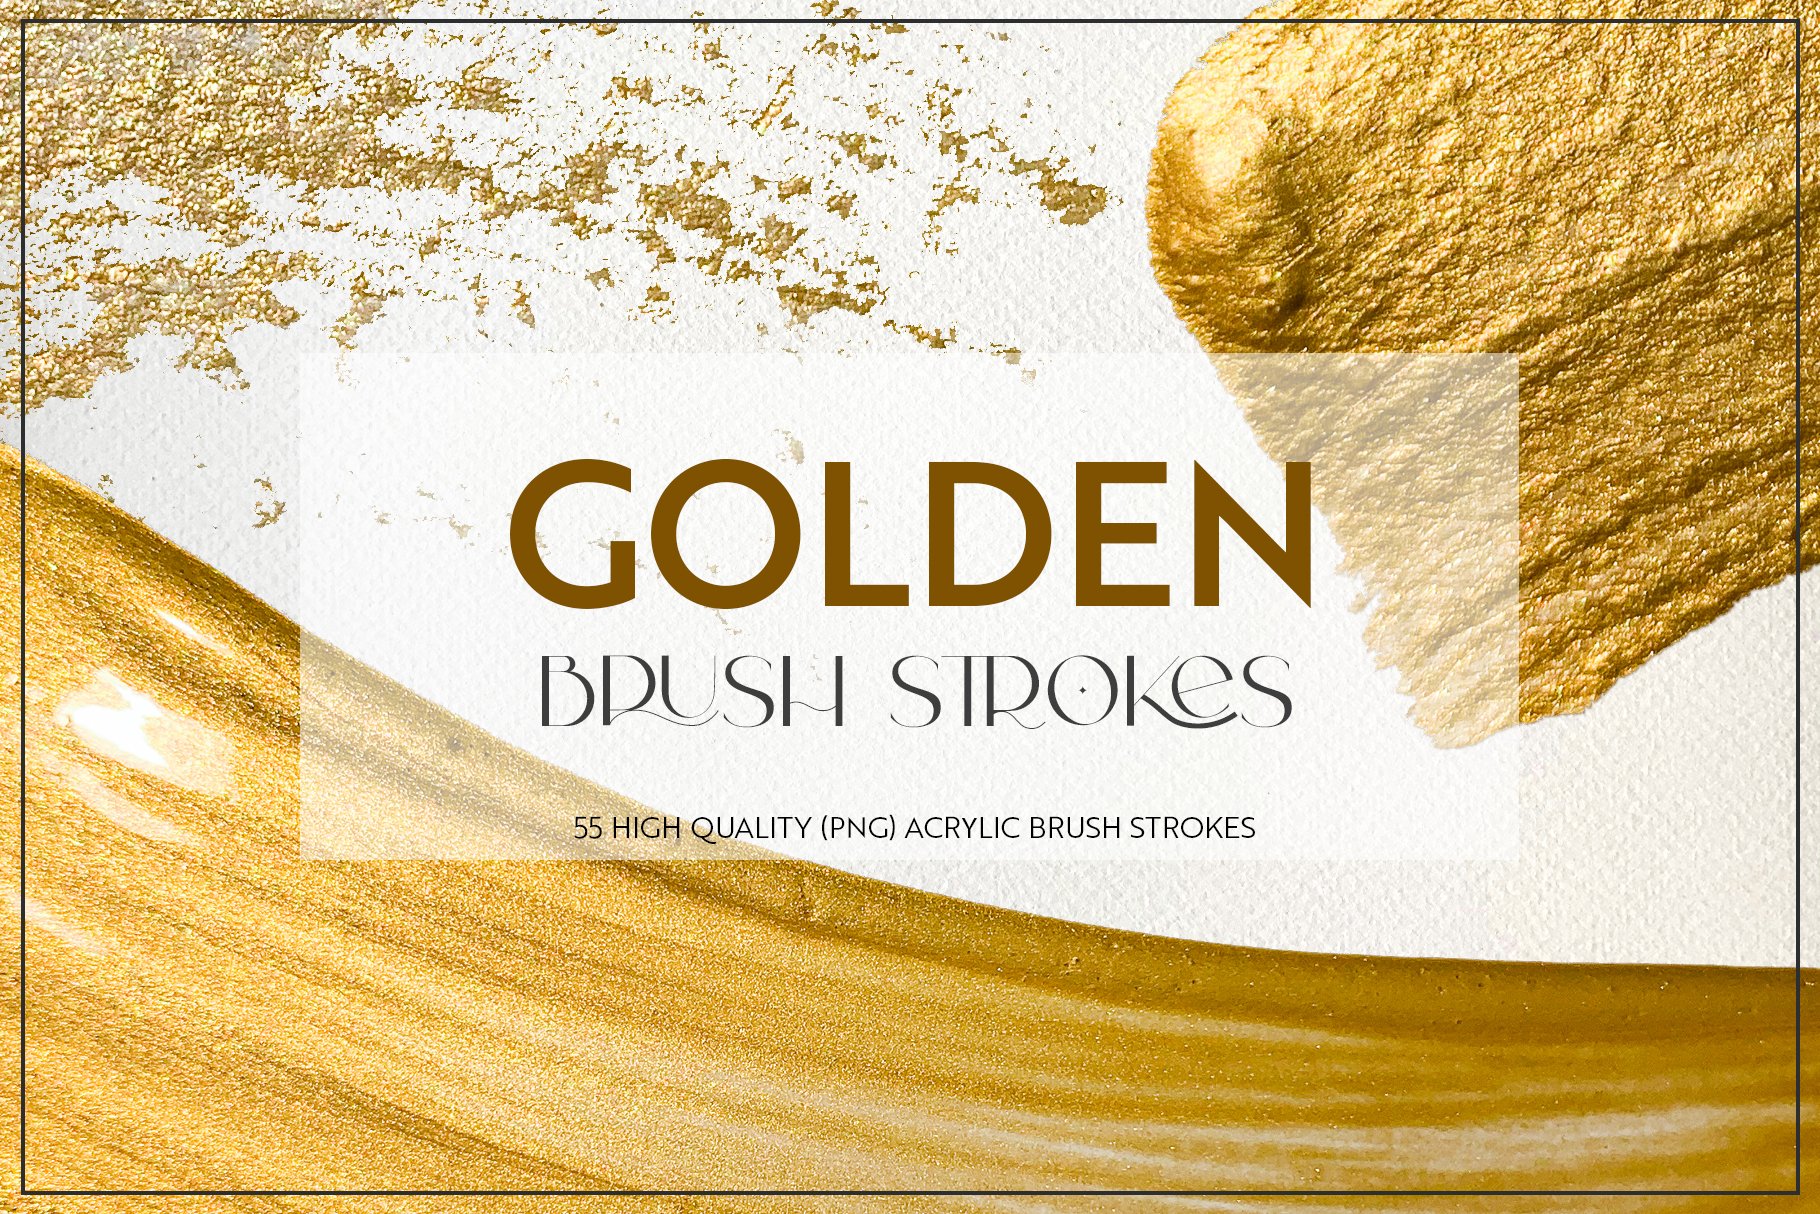 Golden | Acrylic Brush Strokes cover image.